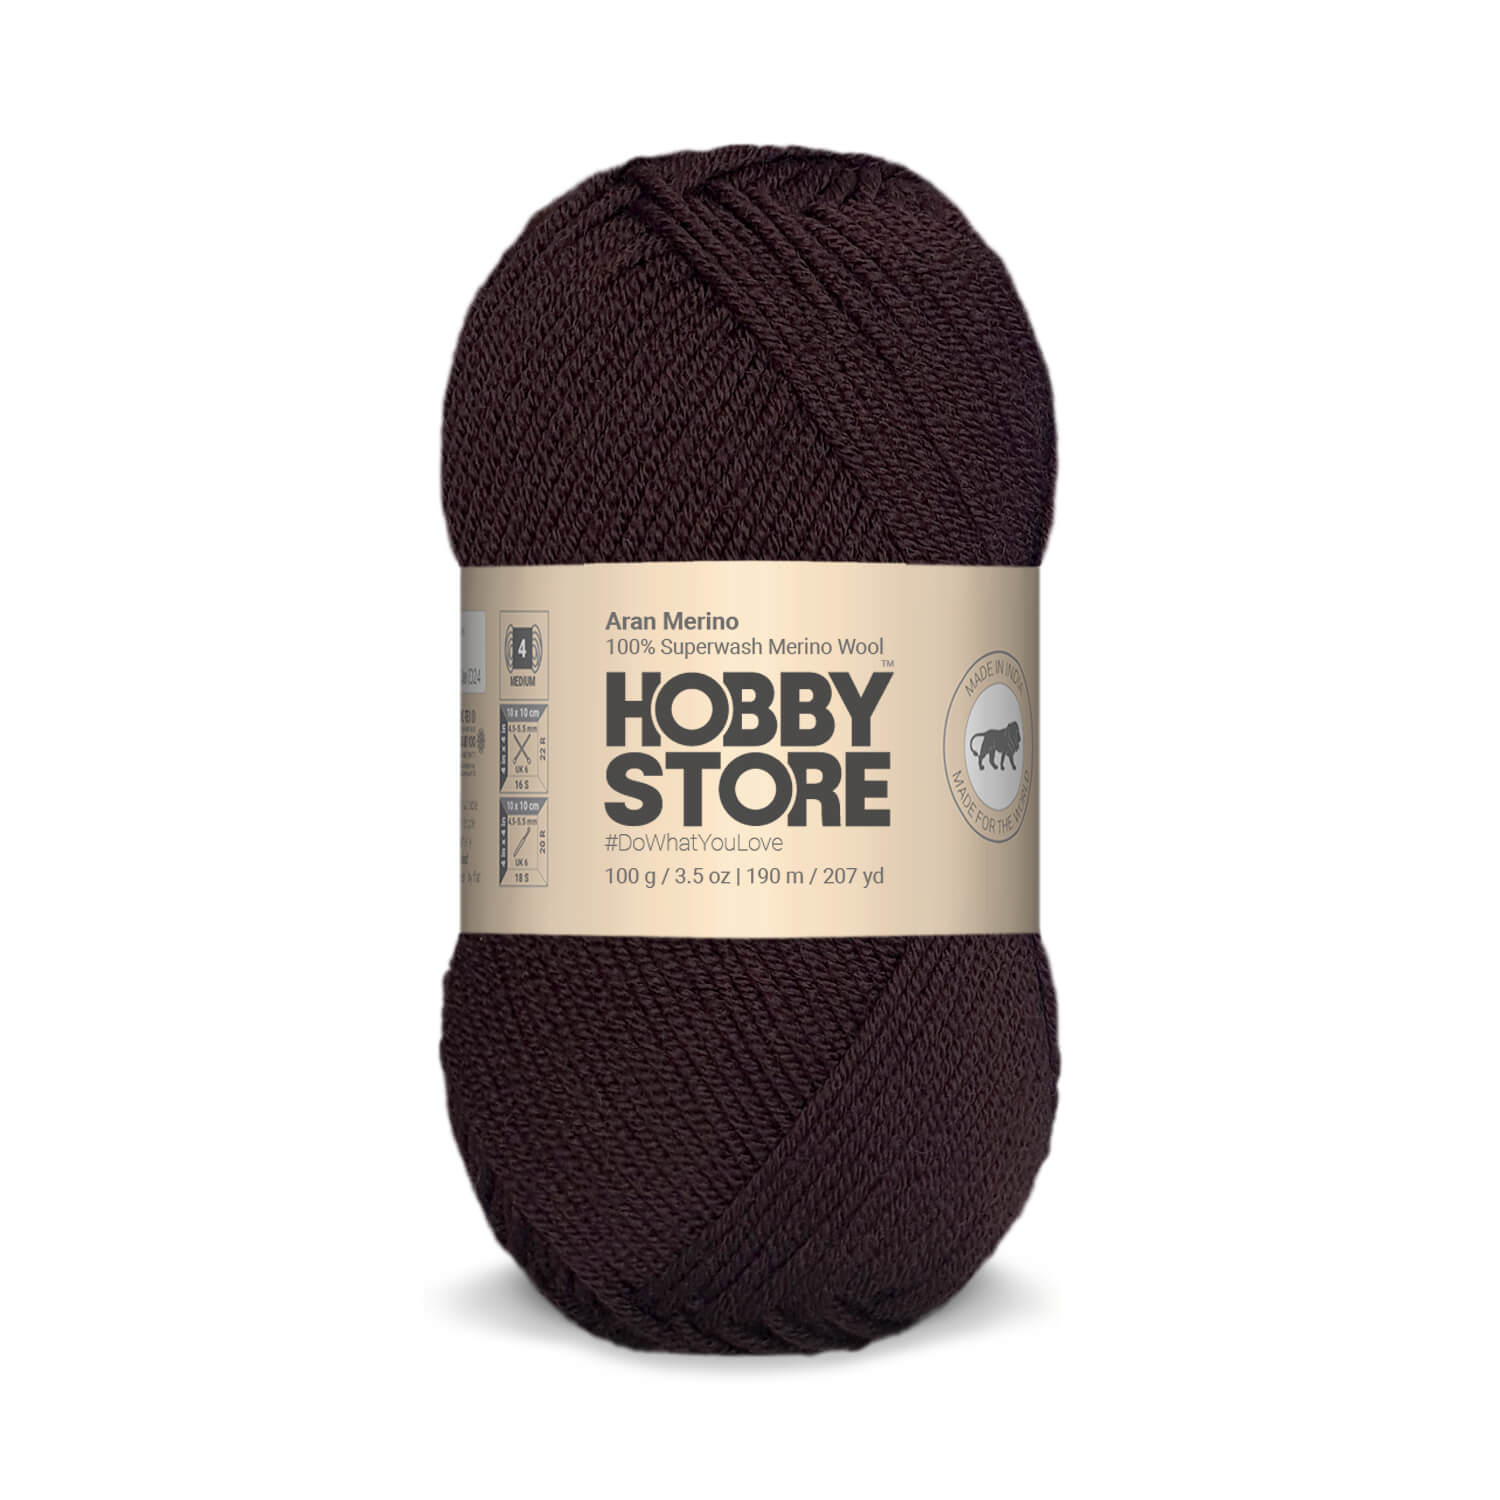 Aran Merino Wool by Hobby Store - Dark Brown AM013